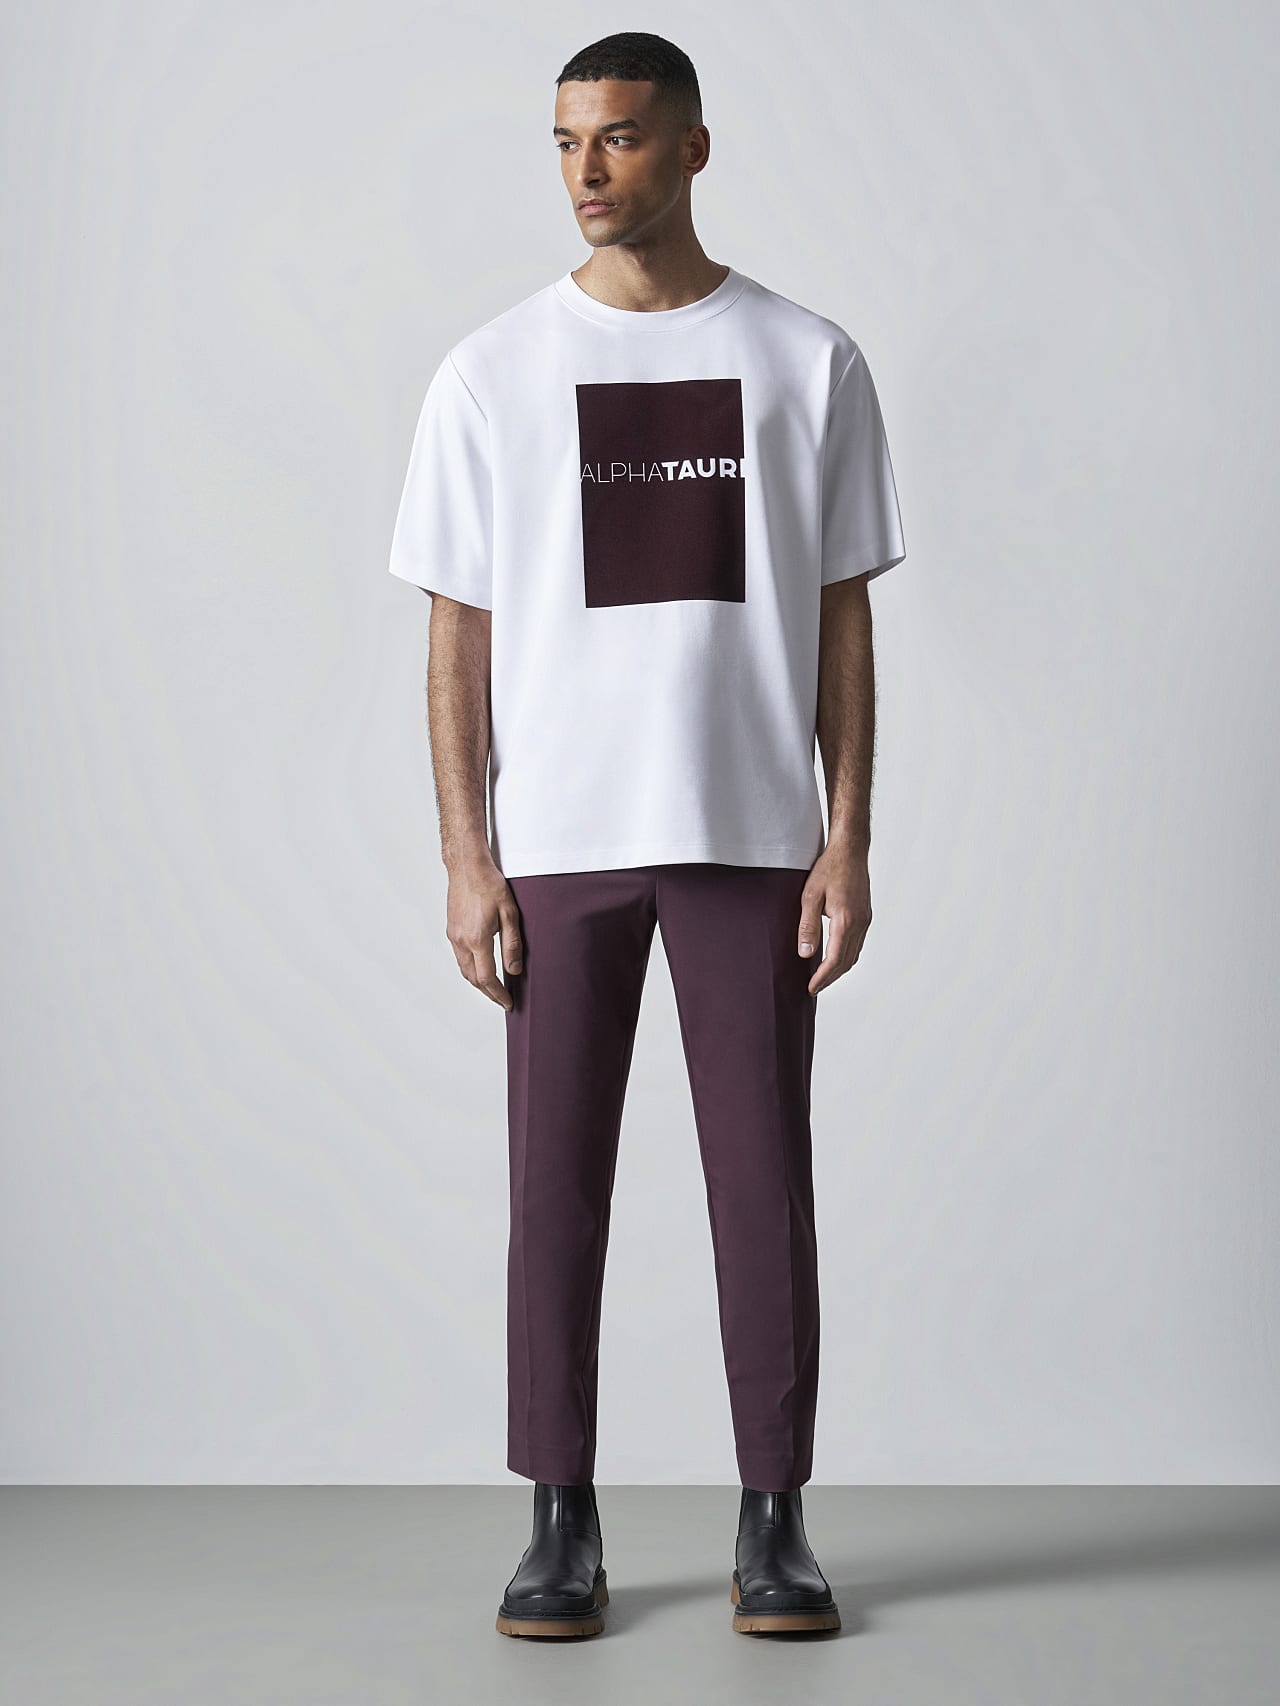 AlphaTauri | JAHEV V1.Y5.02 | T-shirt casual con logo in bianco for Uomo